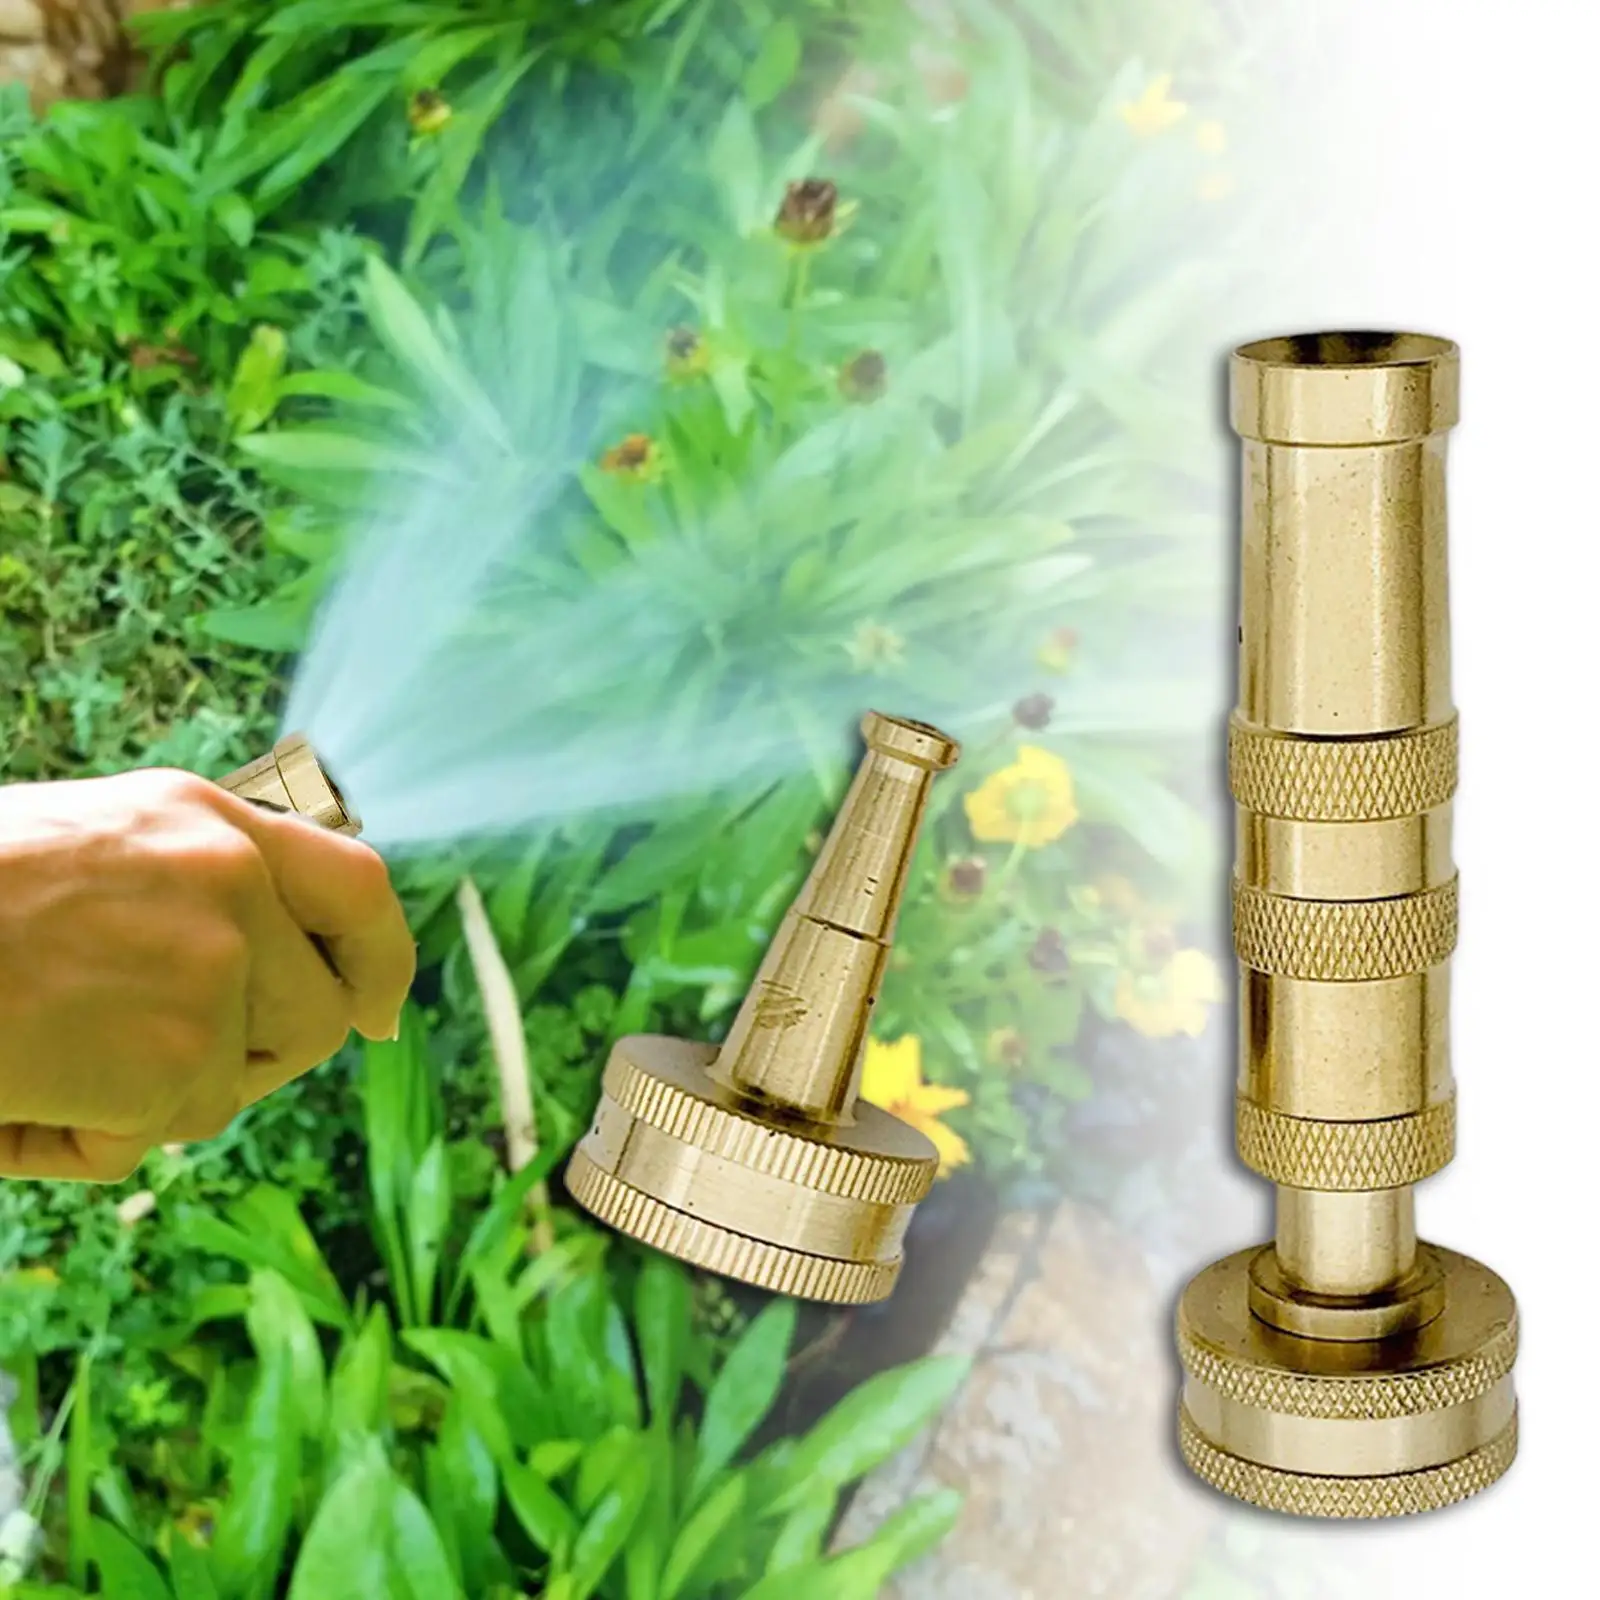 Brass Hose Nozzles Pressure Spray Attachment Water Hose Sprayer Nozzle Garden Hose Nozzle for Walkway house Car Wash Yard